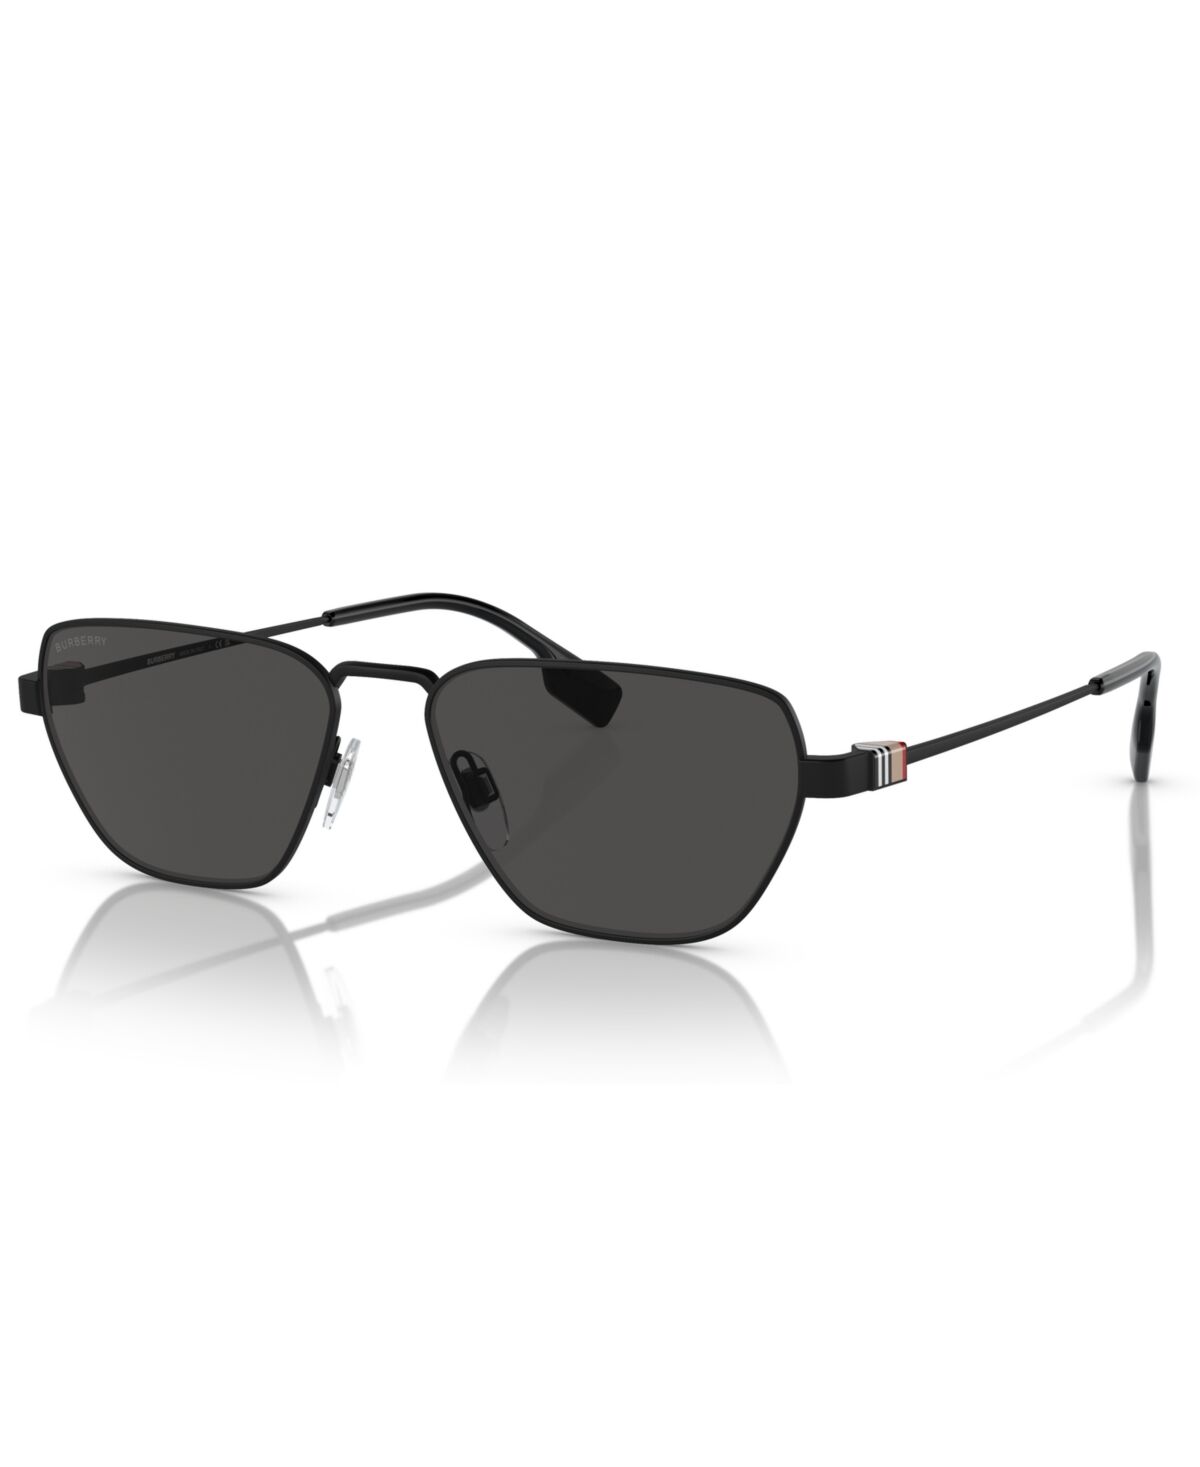 Burberry Men's Sunglasses BE3146 - Black